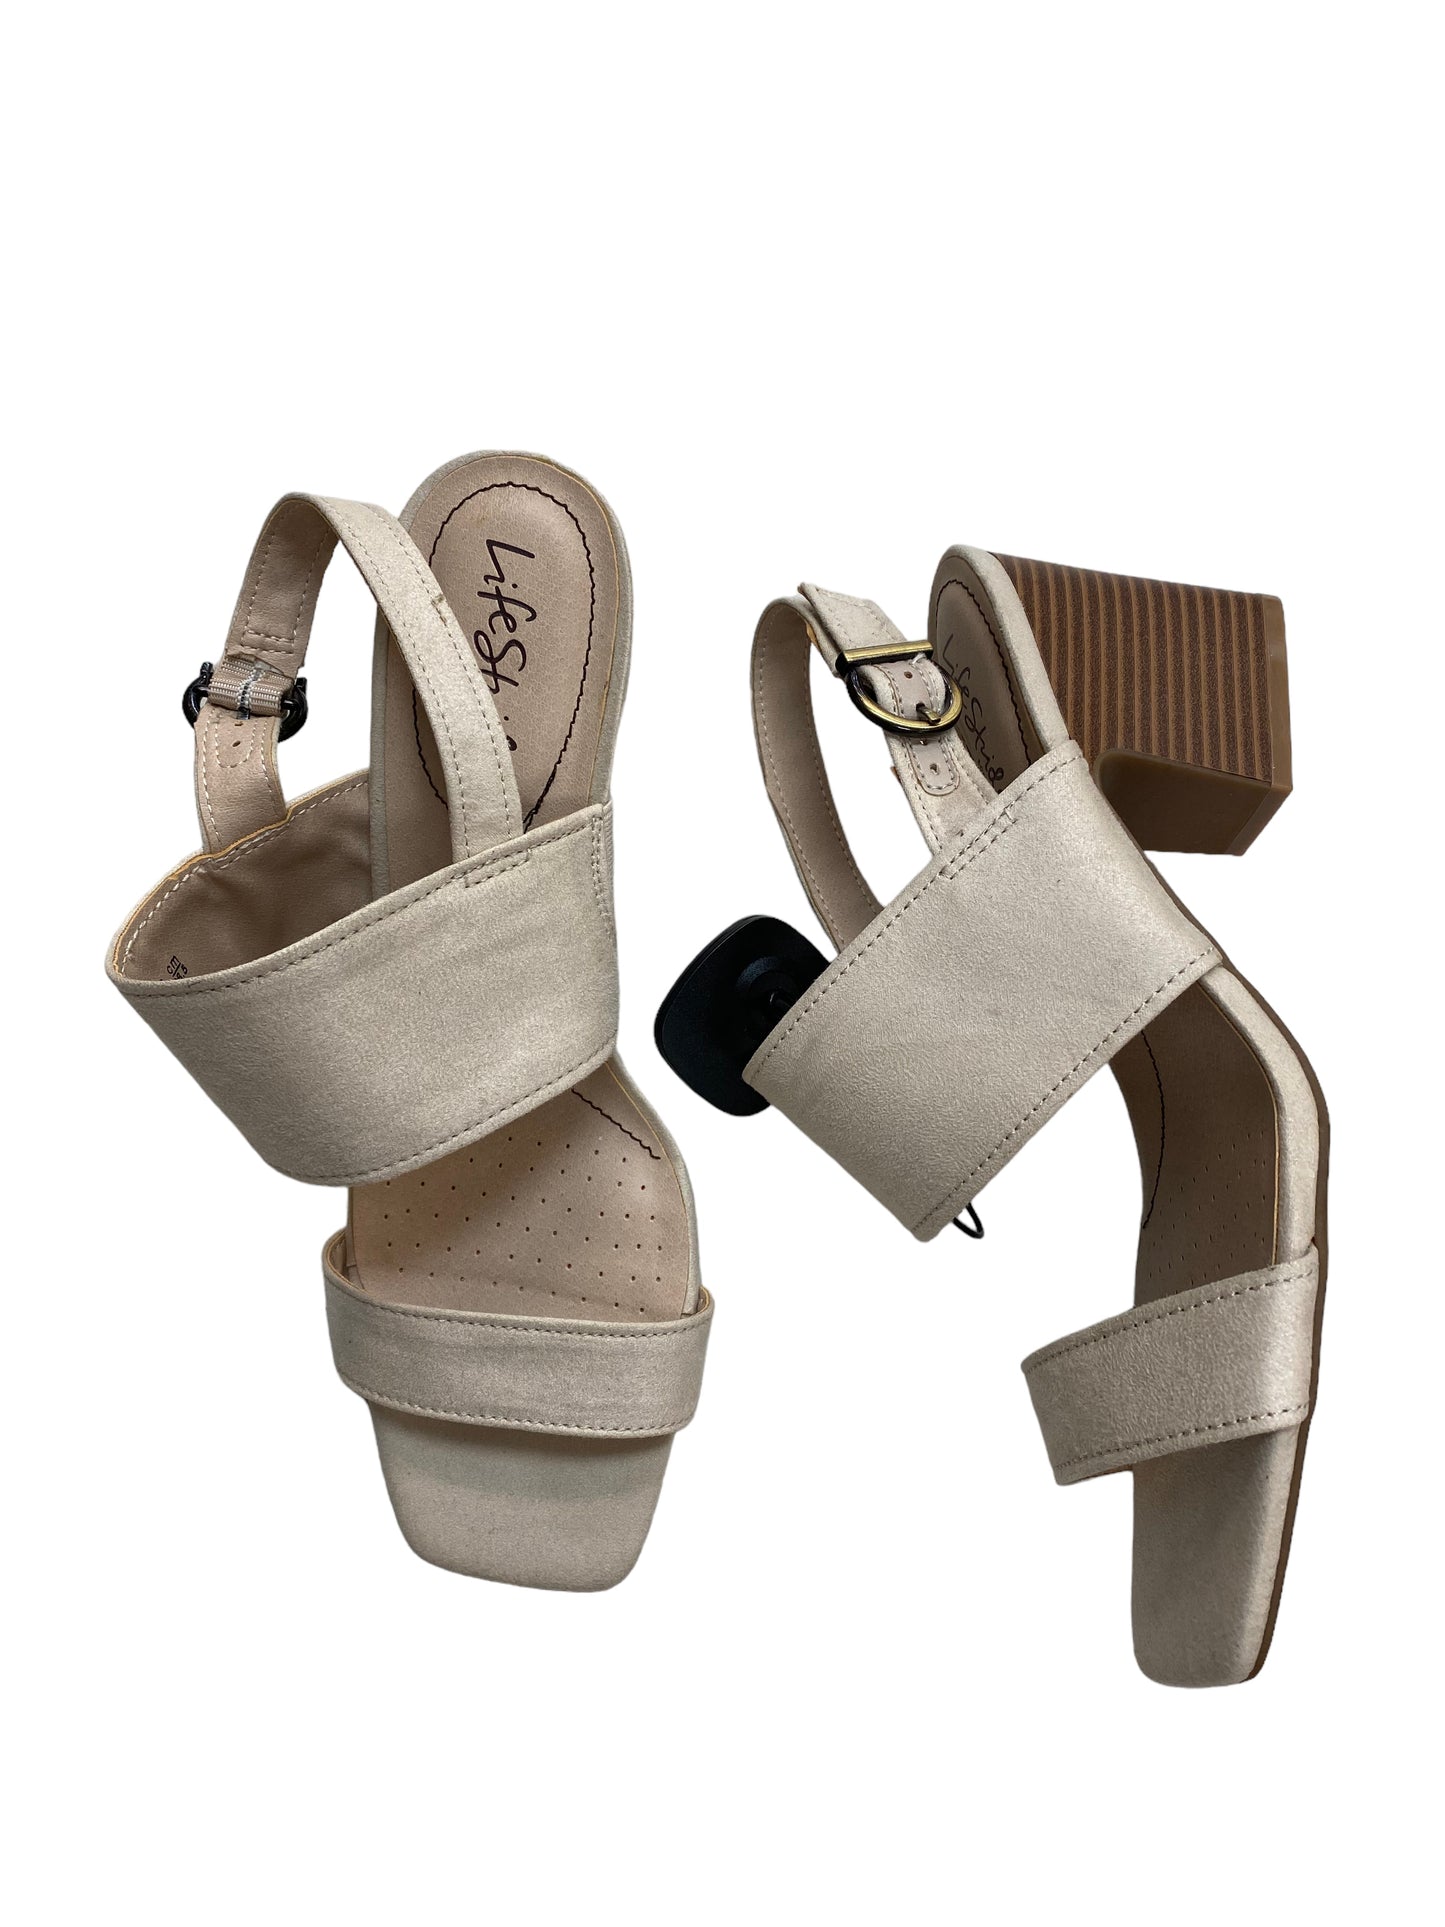 Cream Sandals Heels Block Life Stride, Size 9.5